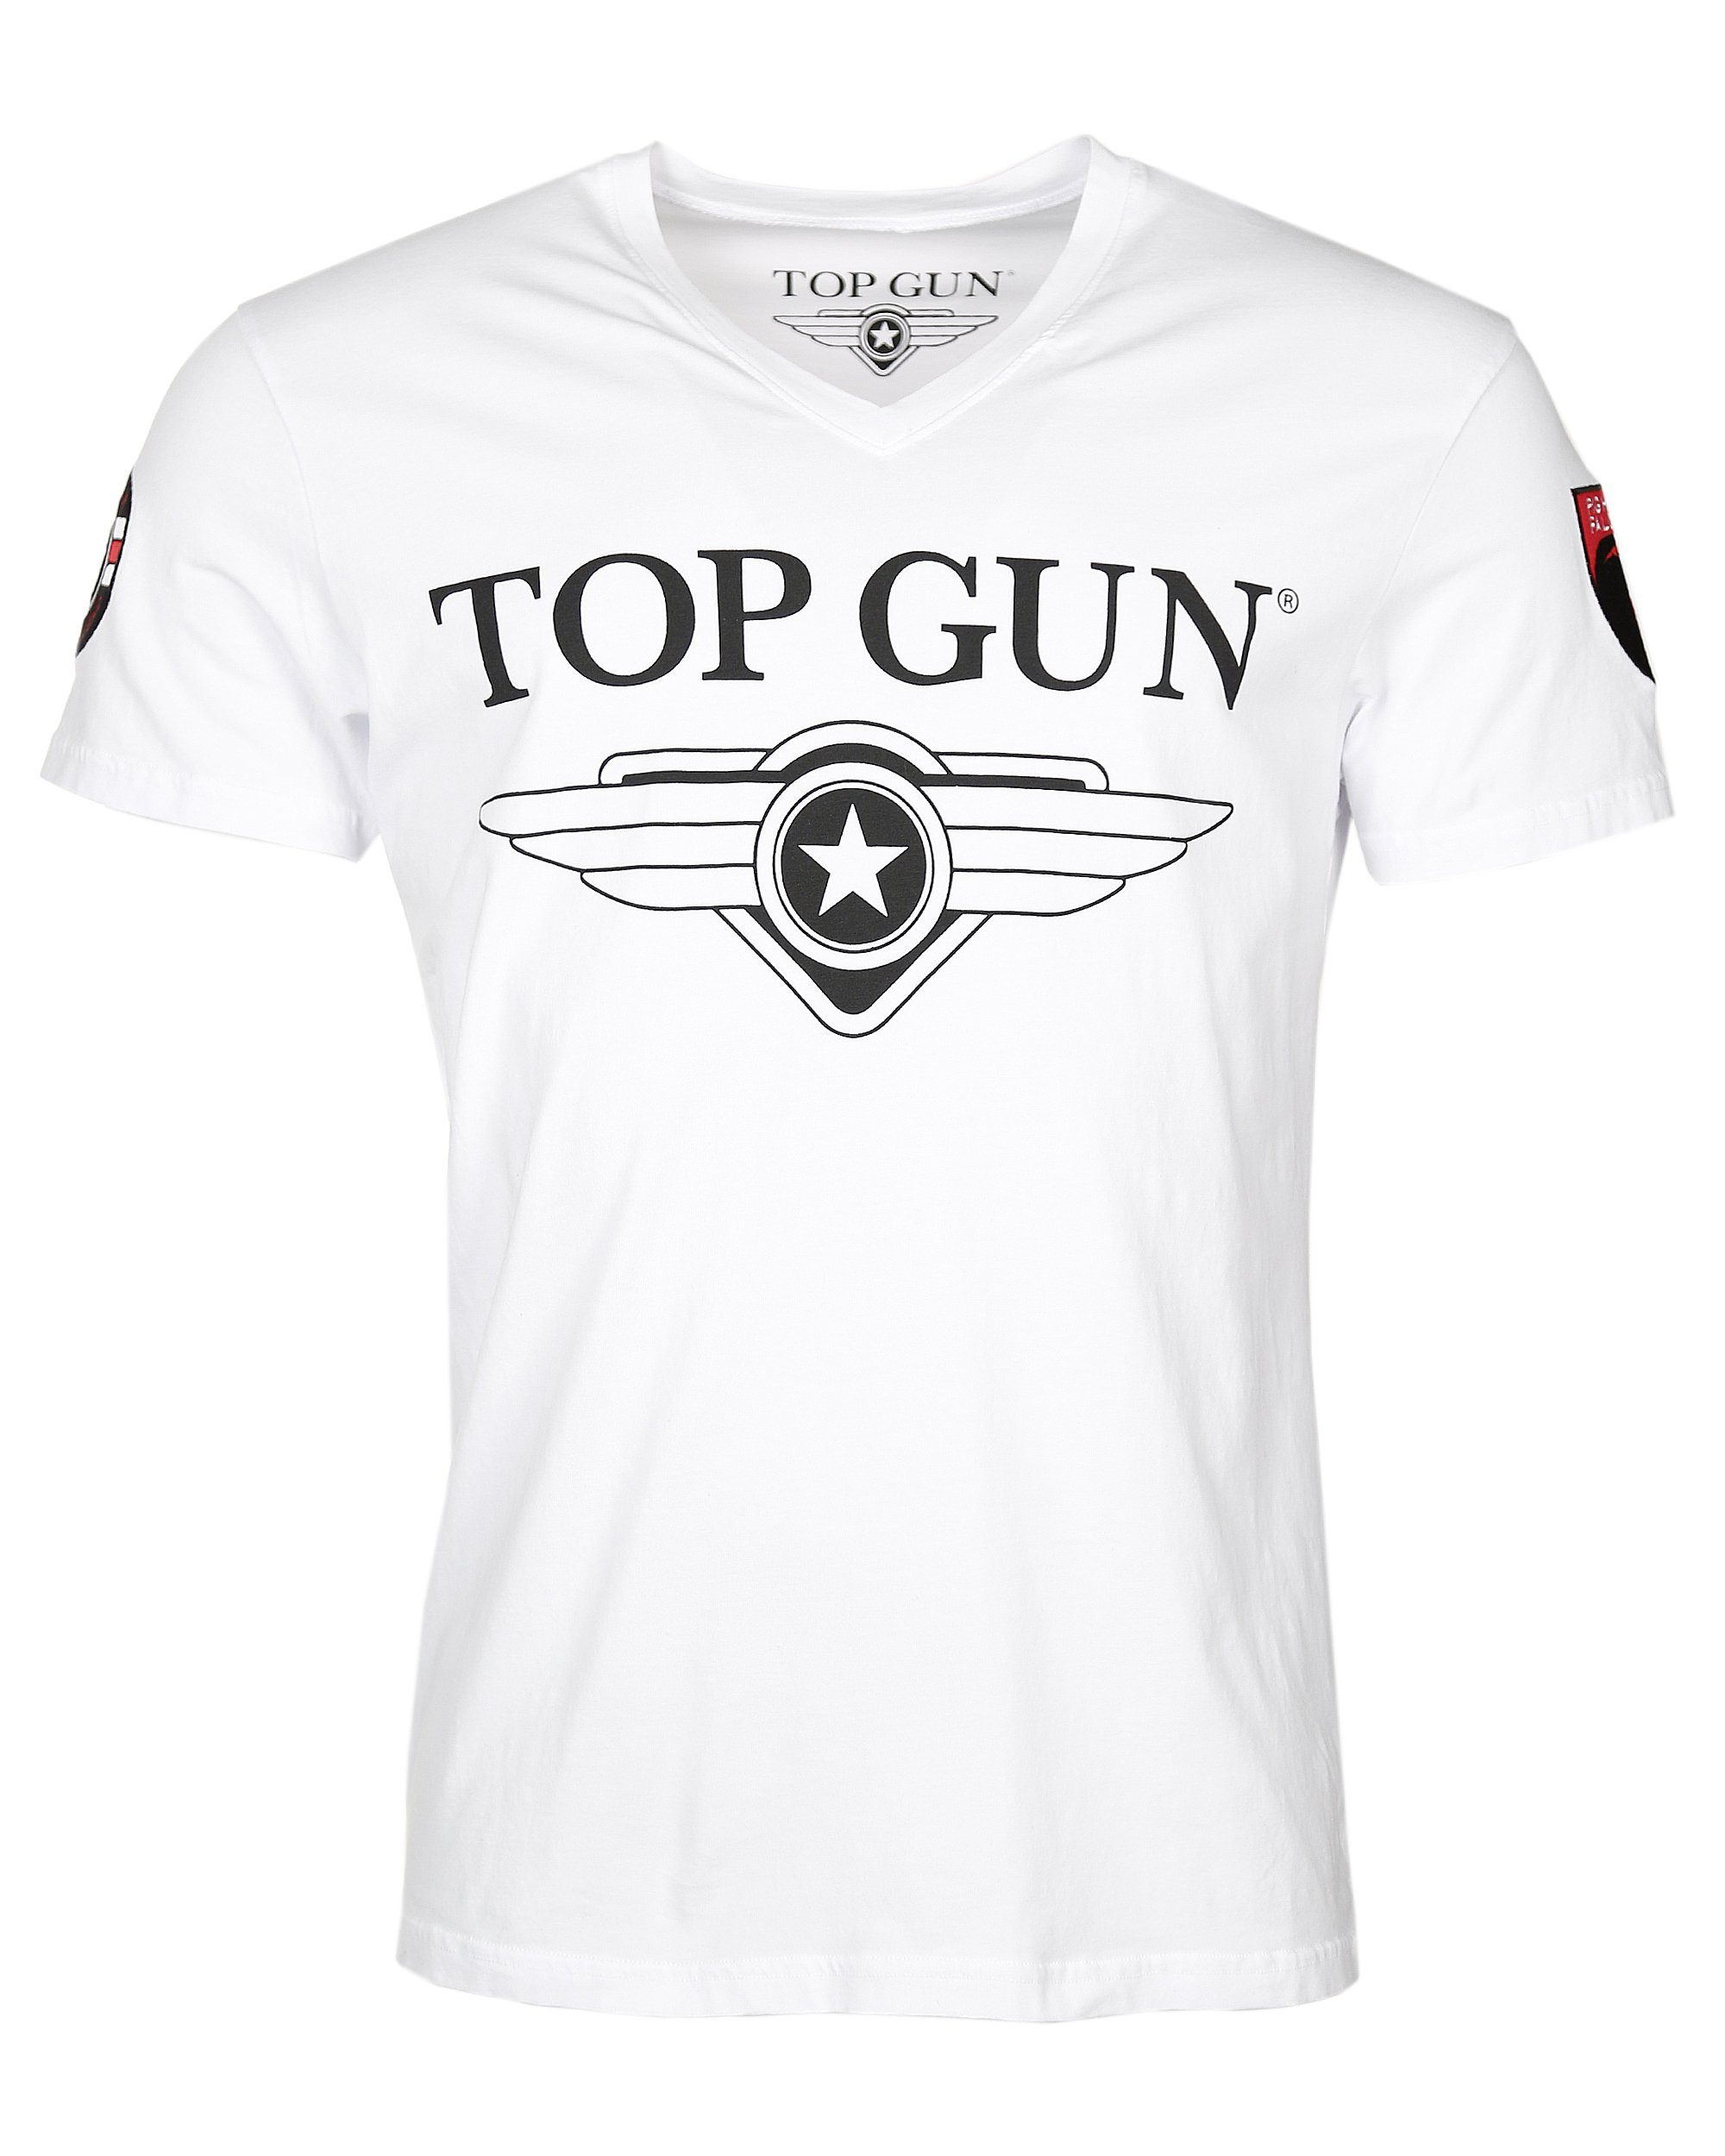 TOP GUN T-Shirt white TG20191004